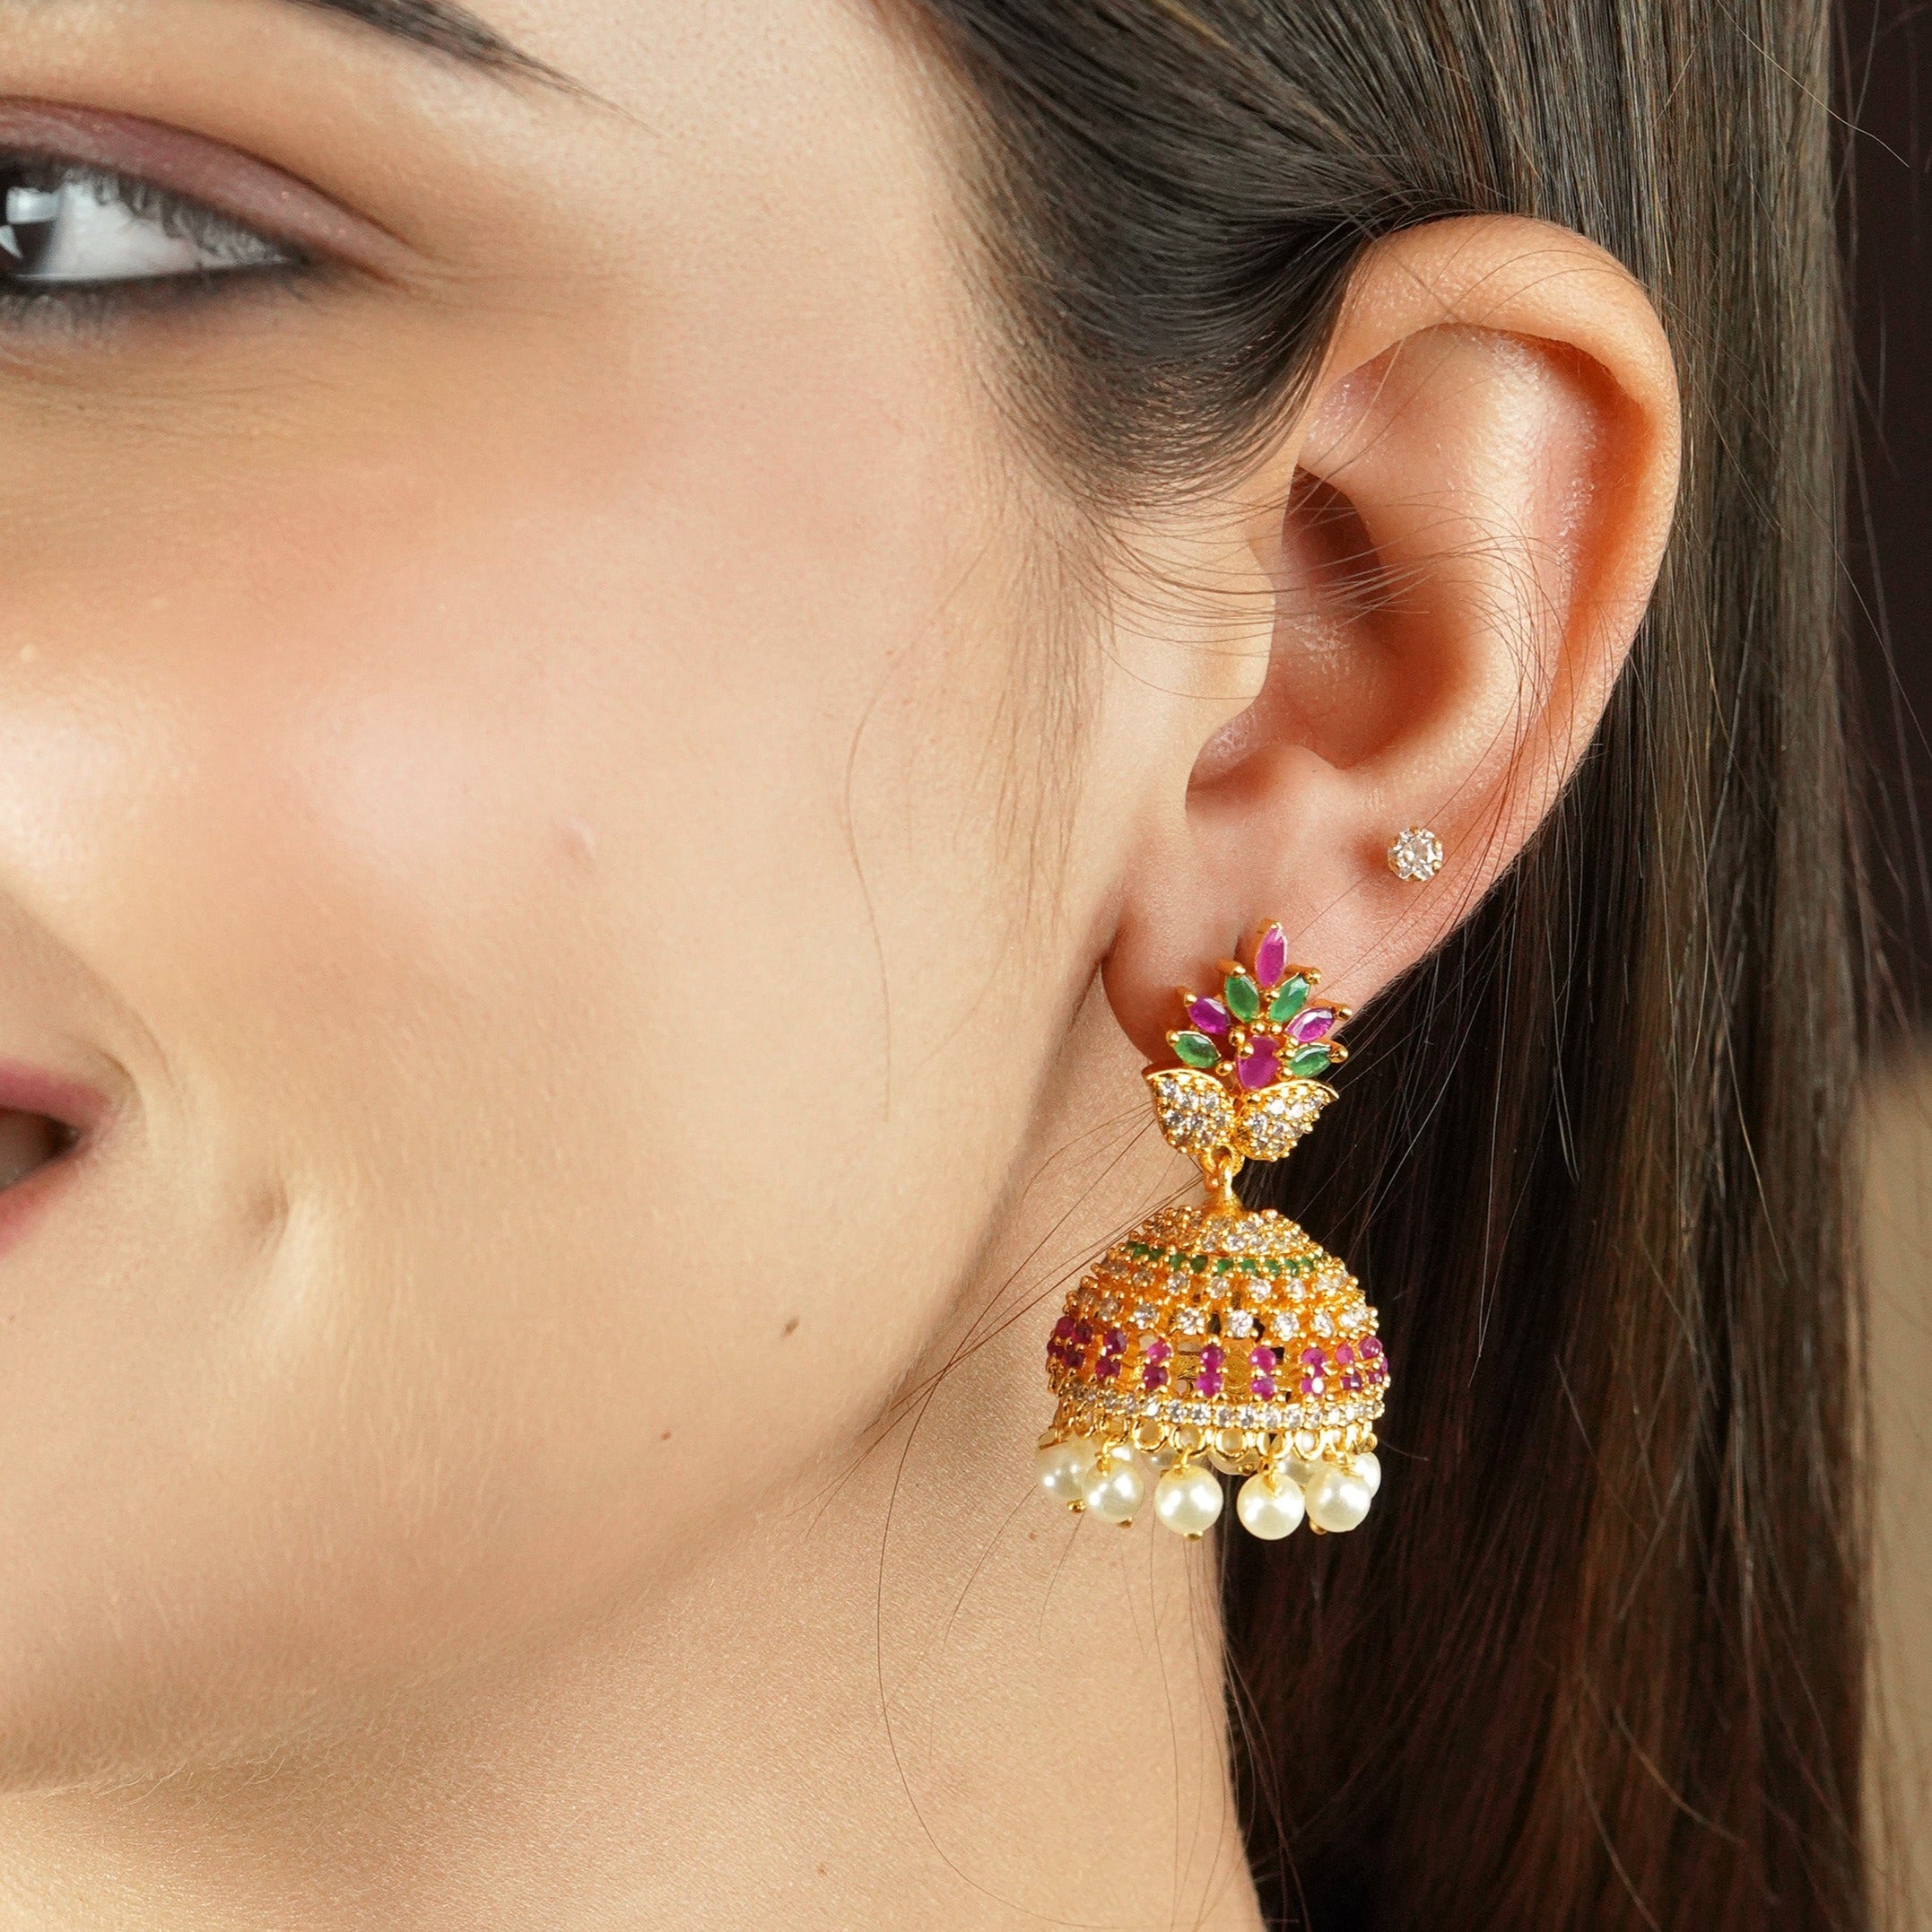 MINUTIAE Oval Shaped Earring Dangler for Women : Amazon.in: Fashion